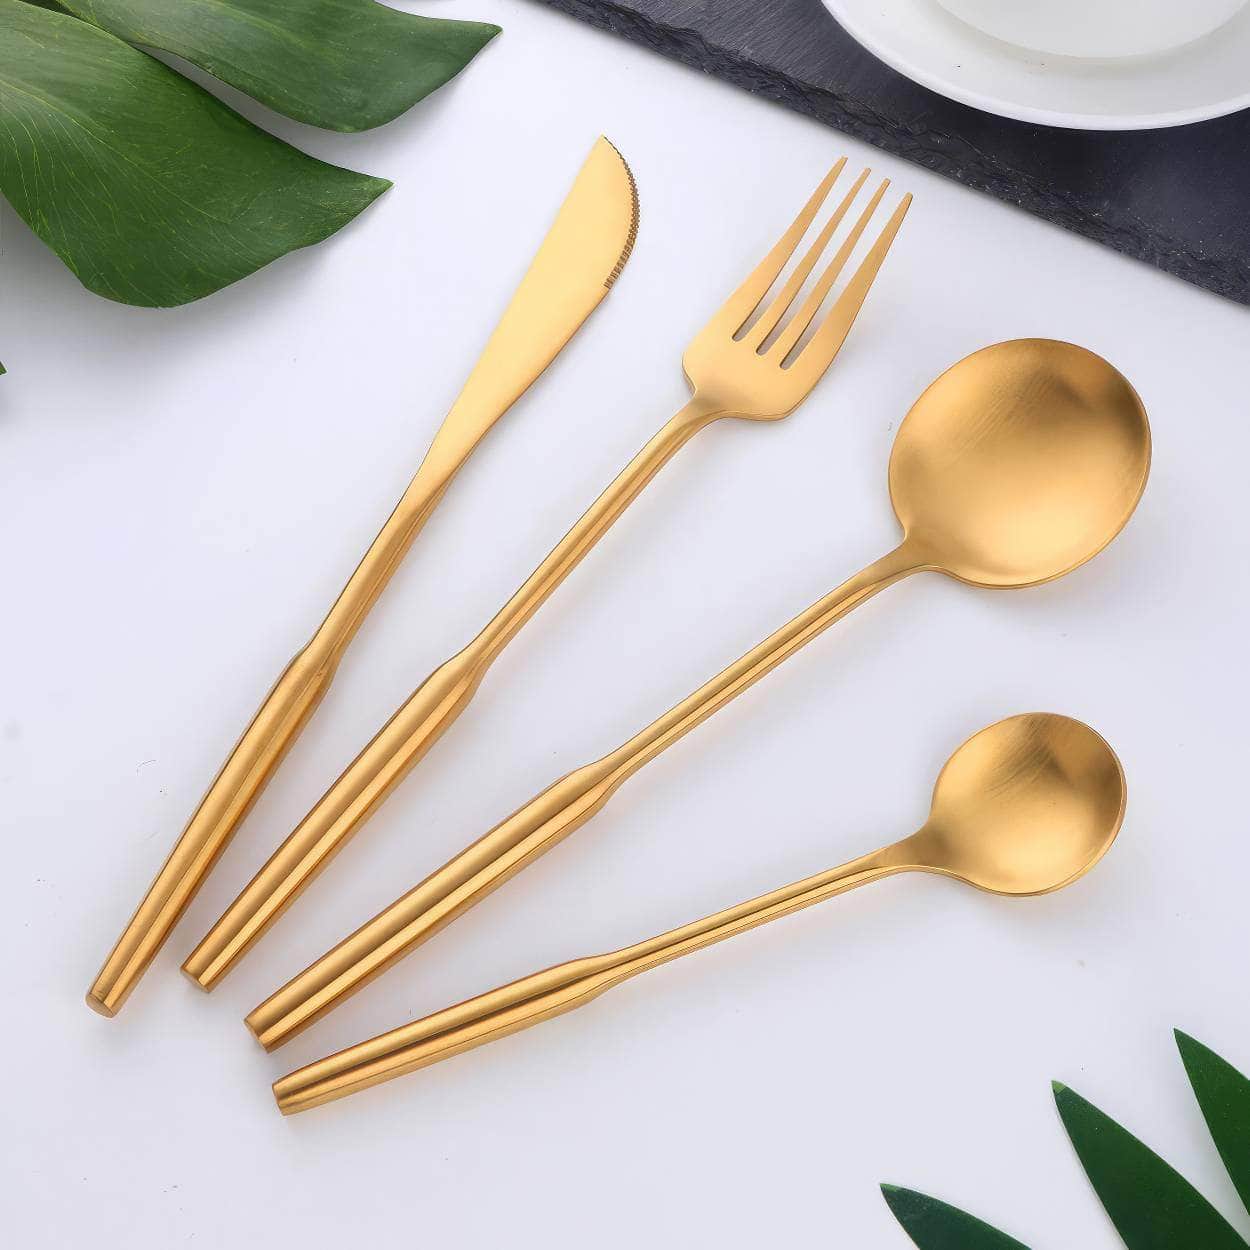 Stainless Steel Gold Dinnerware Set - Round Handle Knife, Fork, Coffee Spoon Cutlery Set, Kitchen Flatware Silverware Sets